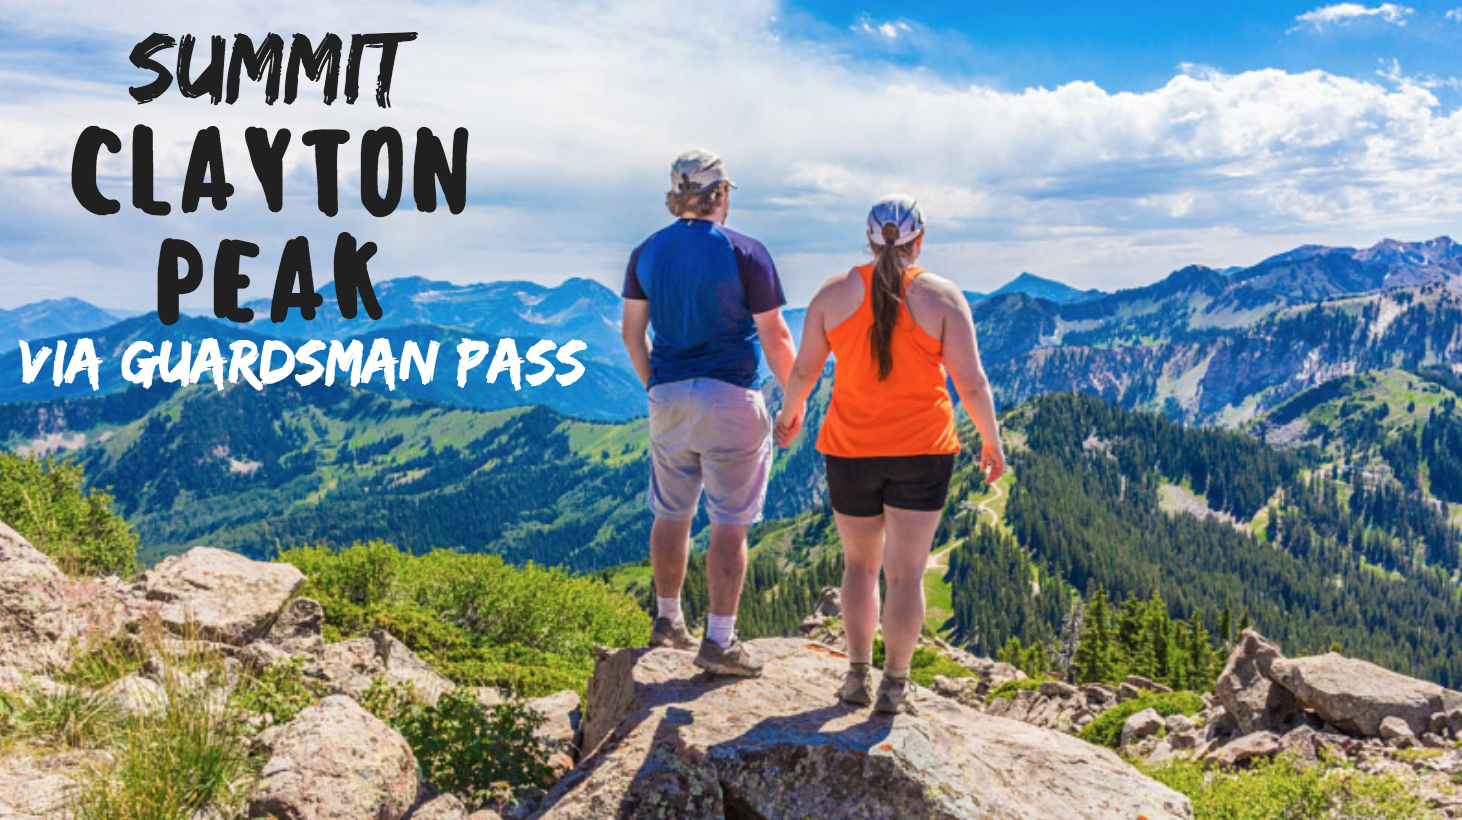 Clayton Peak via Guardsman Pass [Salt Lake City Hike]